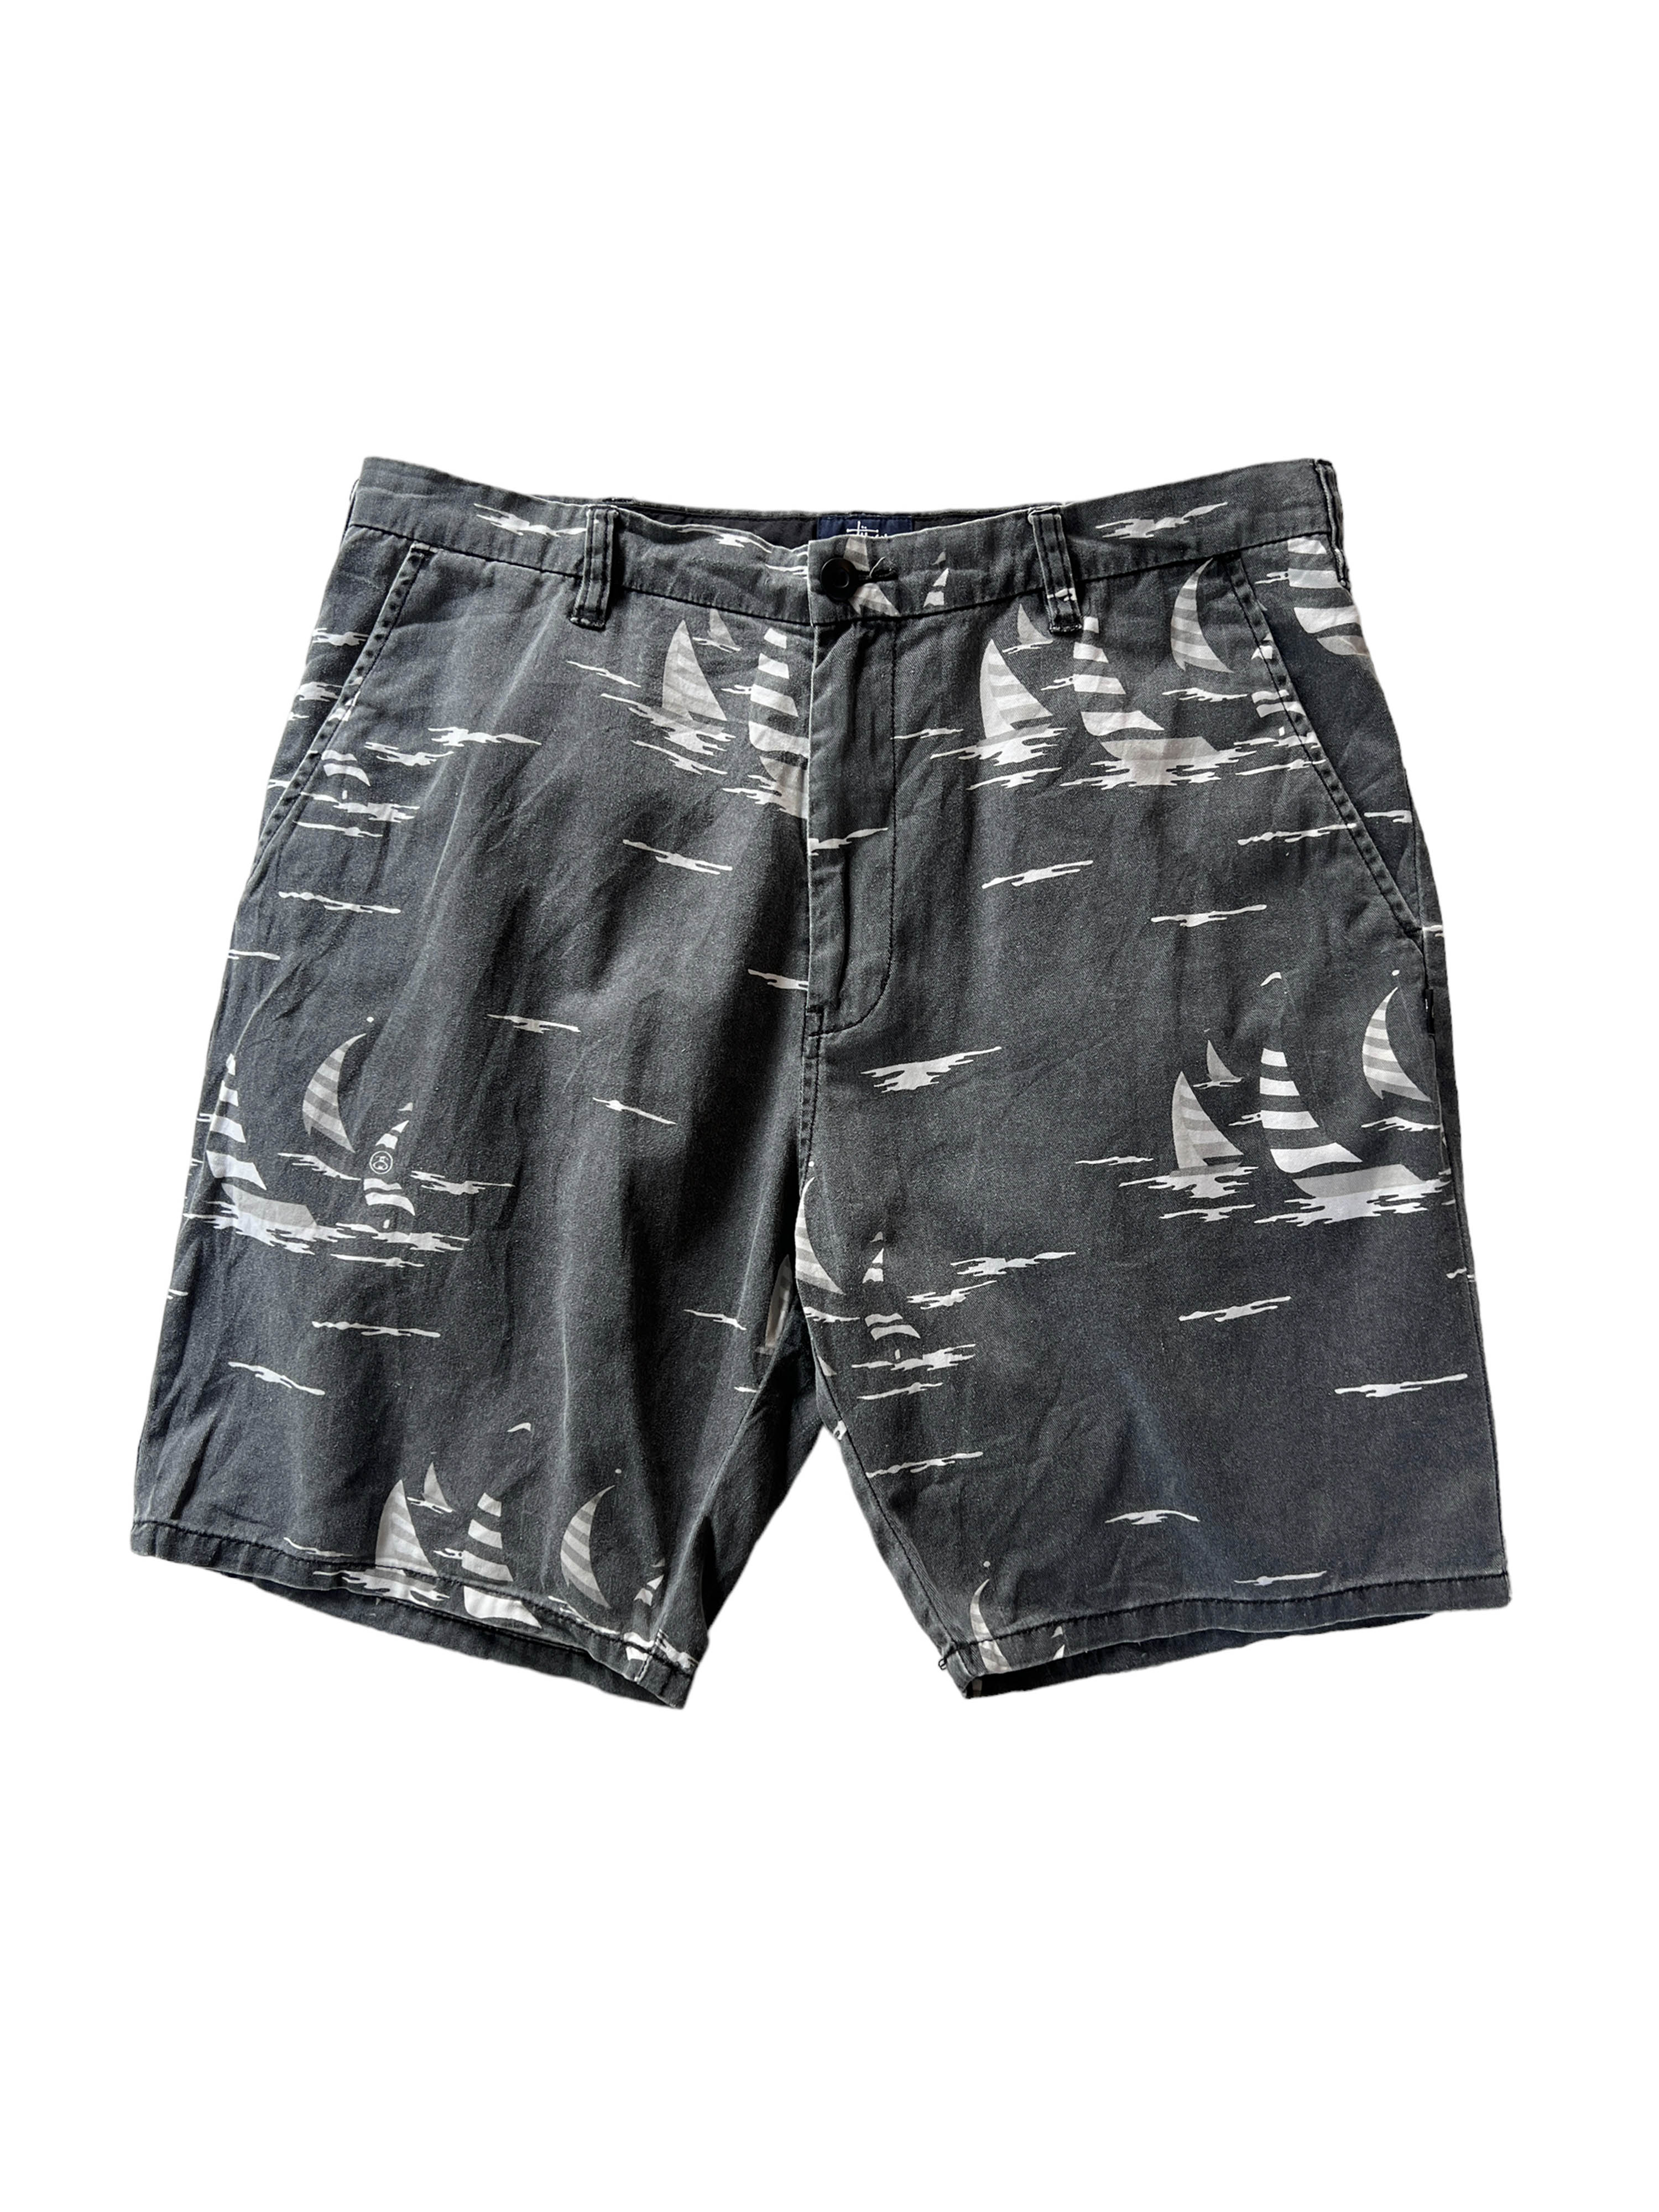 STUSSY ocean shorts